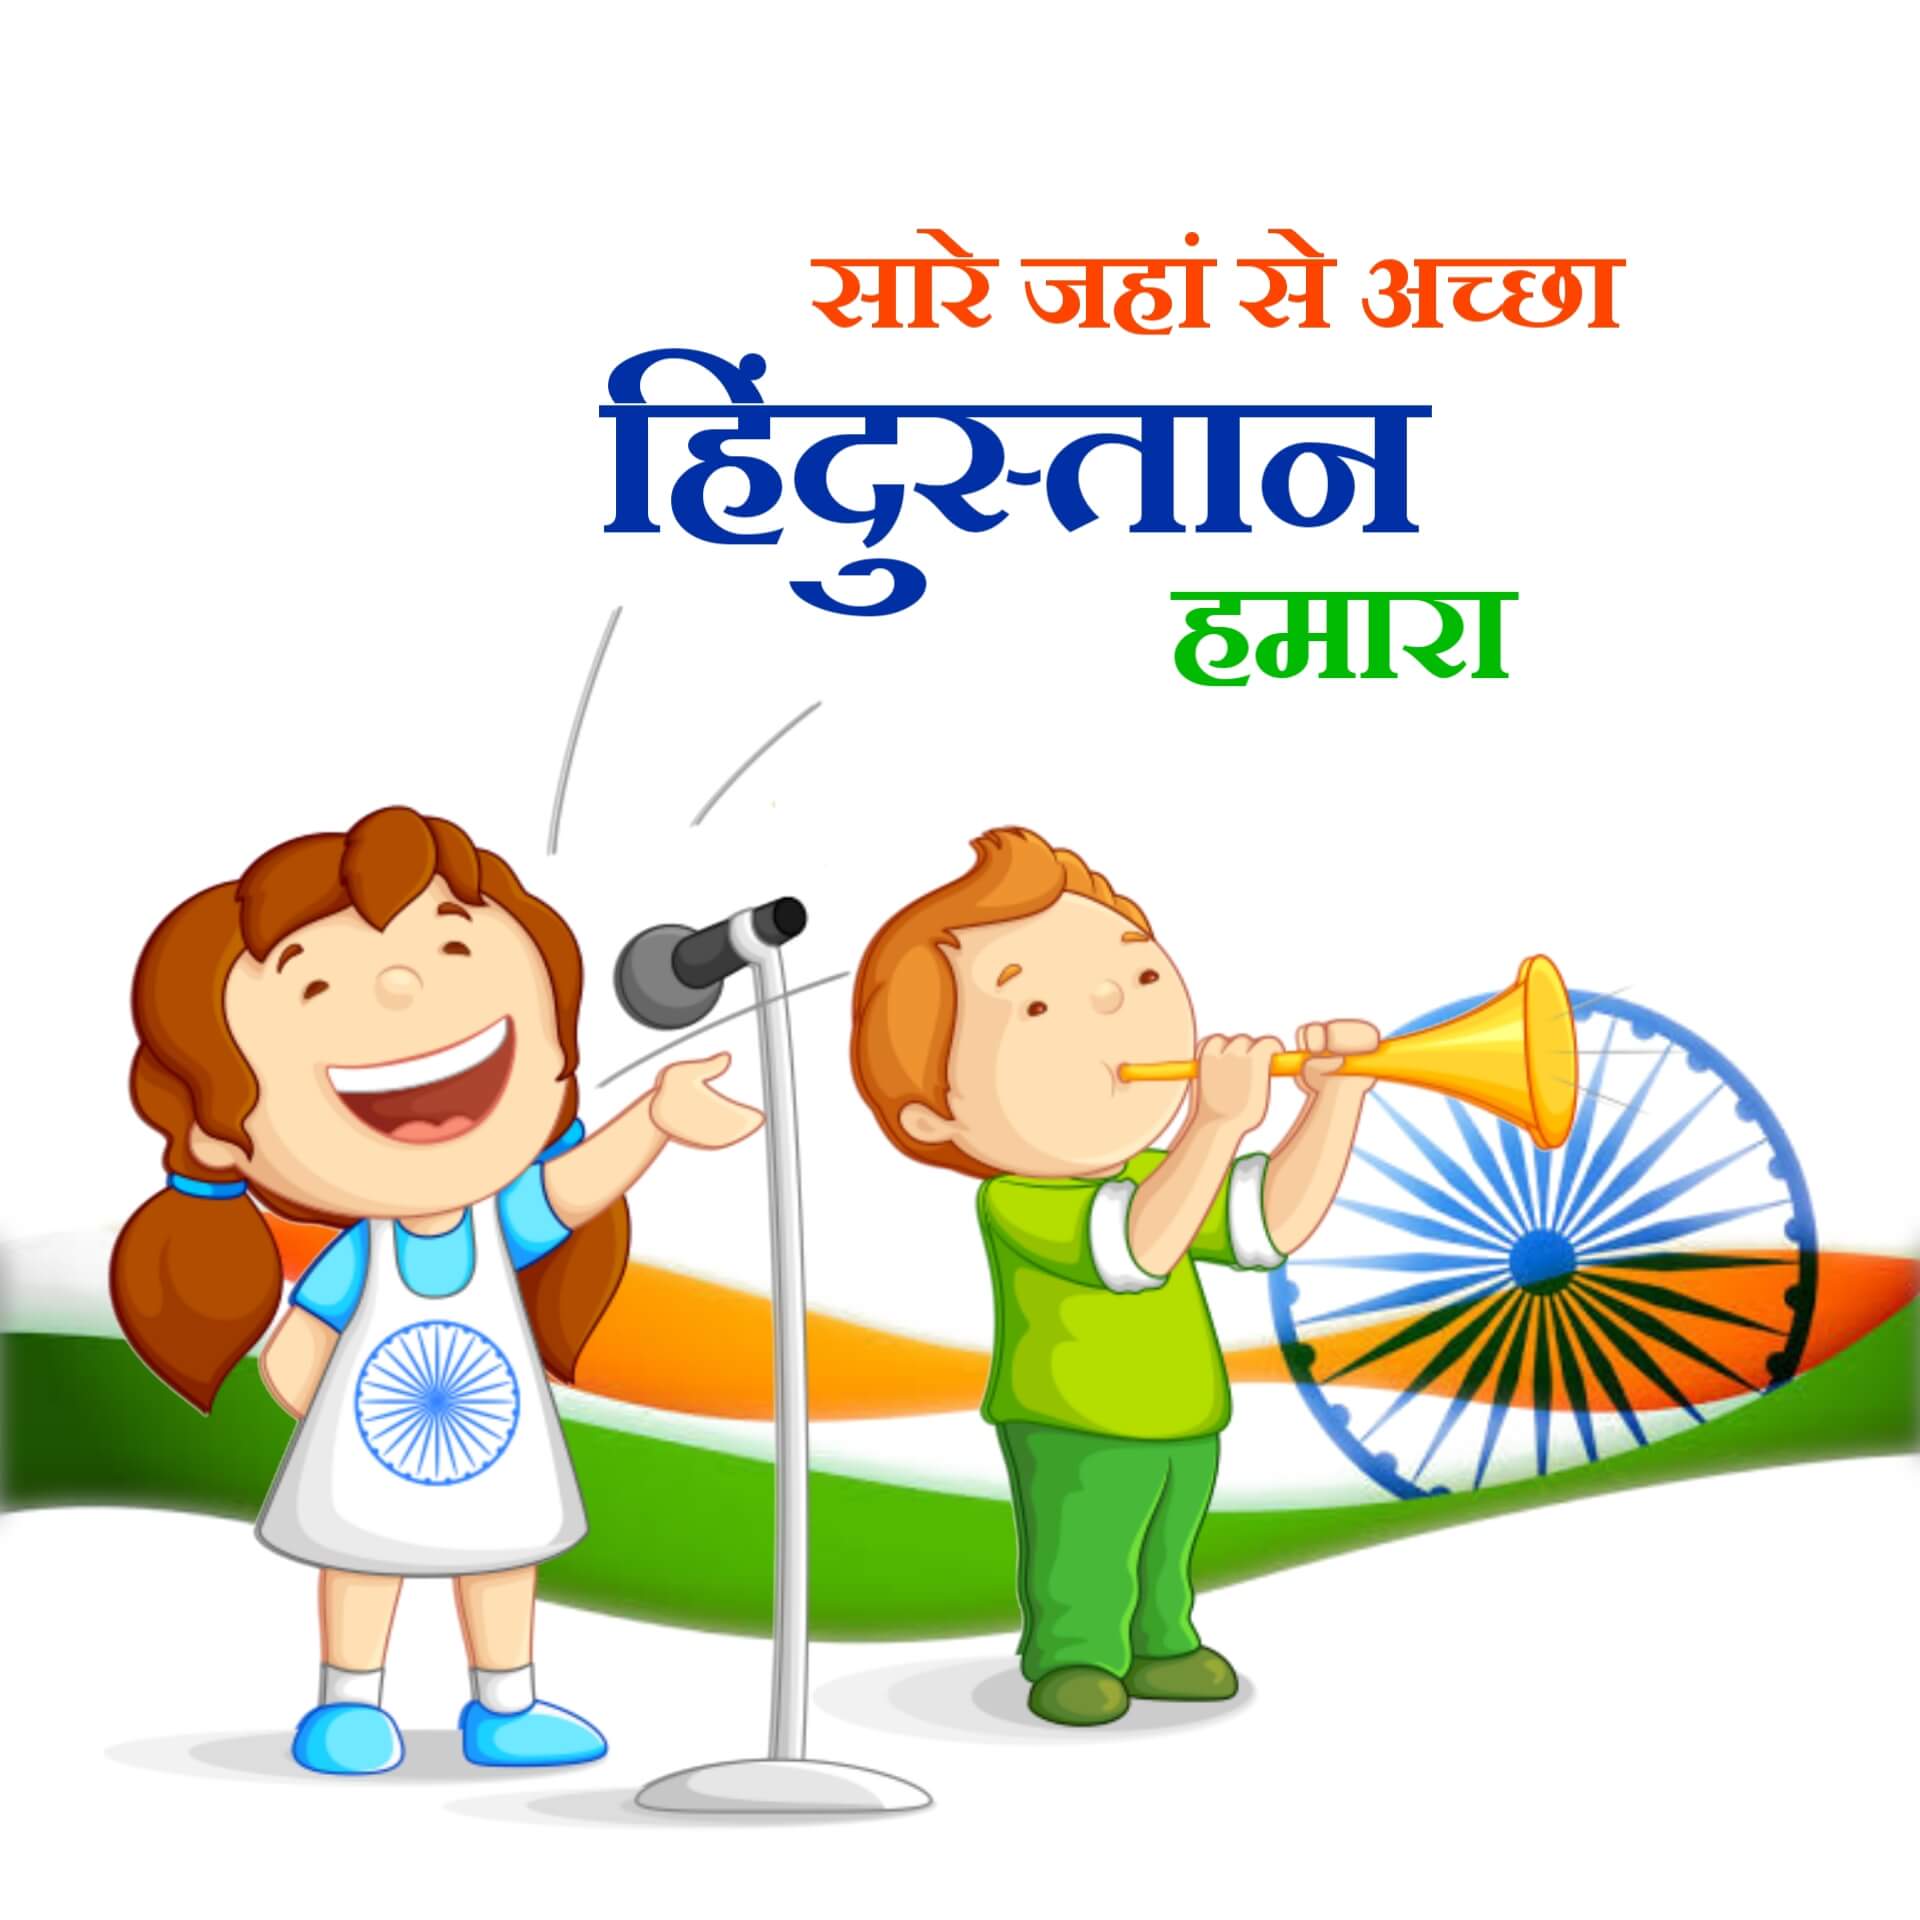 Hindi Independence Day Photo